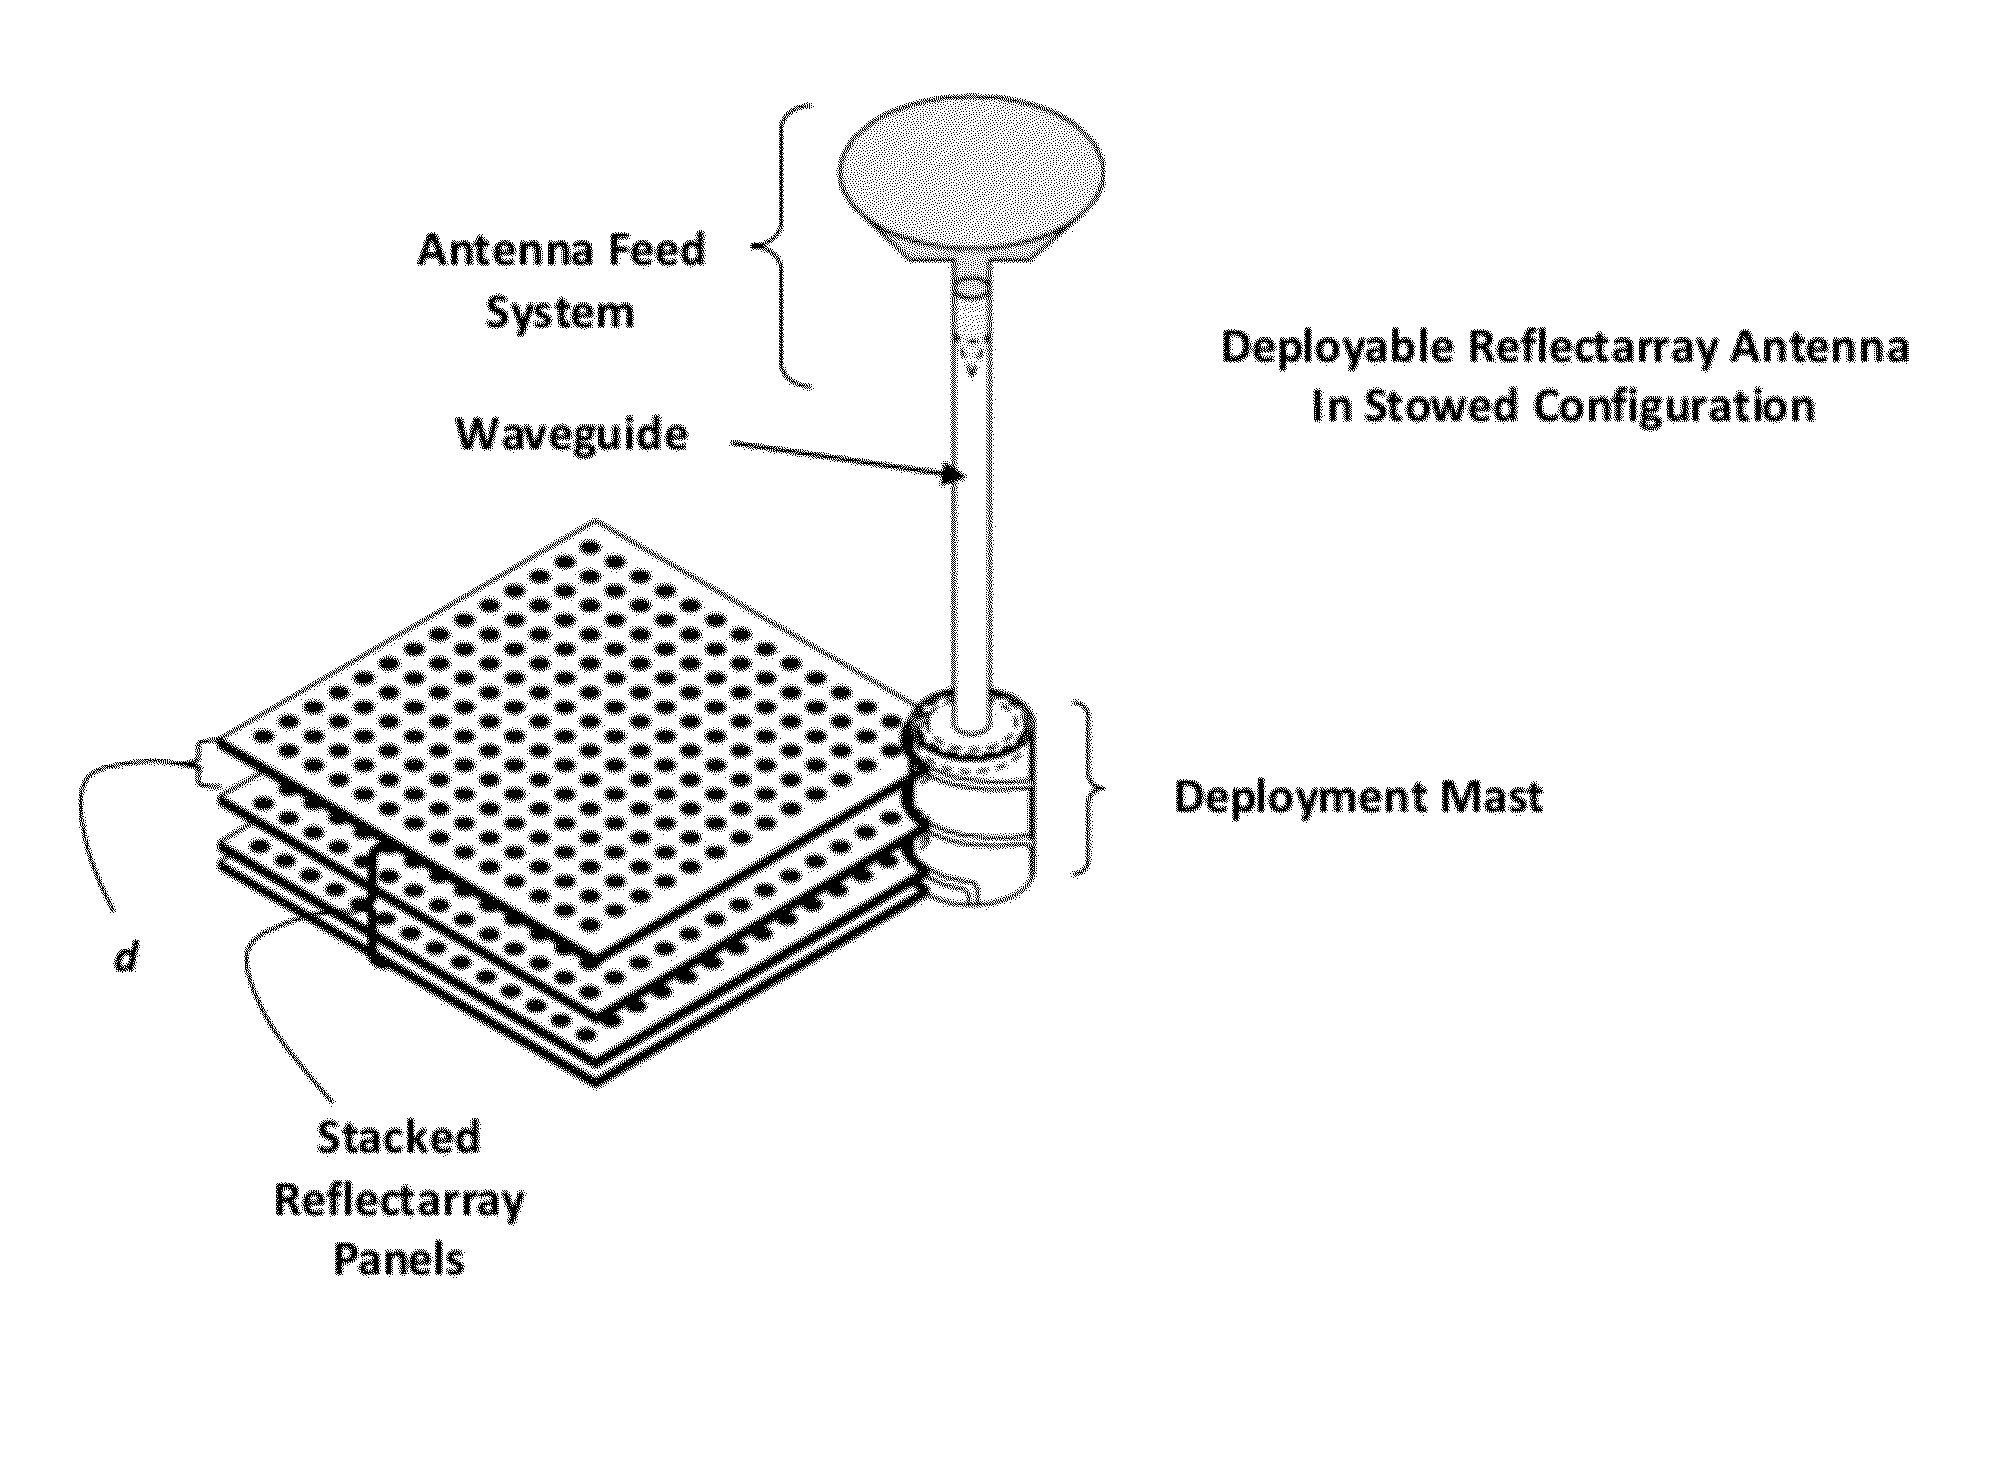 Deployable reflectarray antenna system